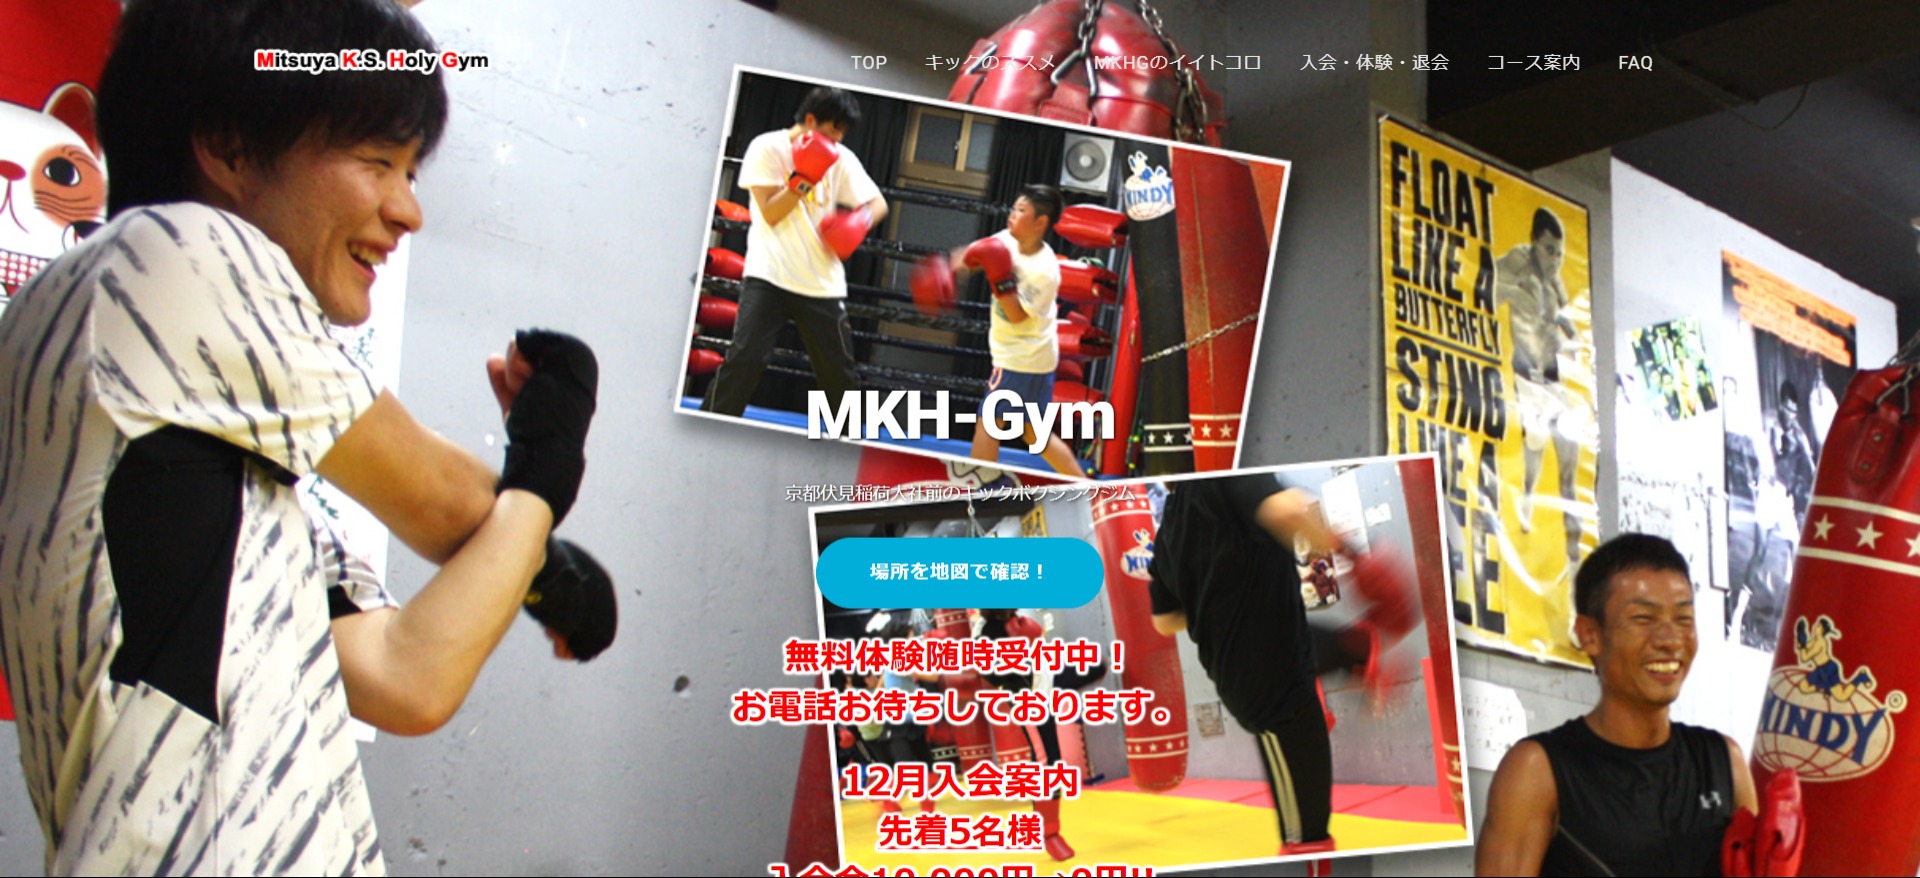 MKH-Gym